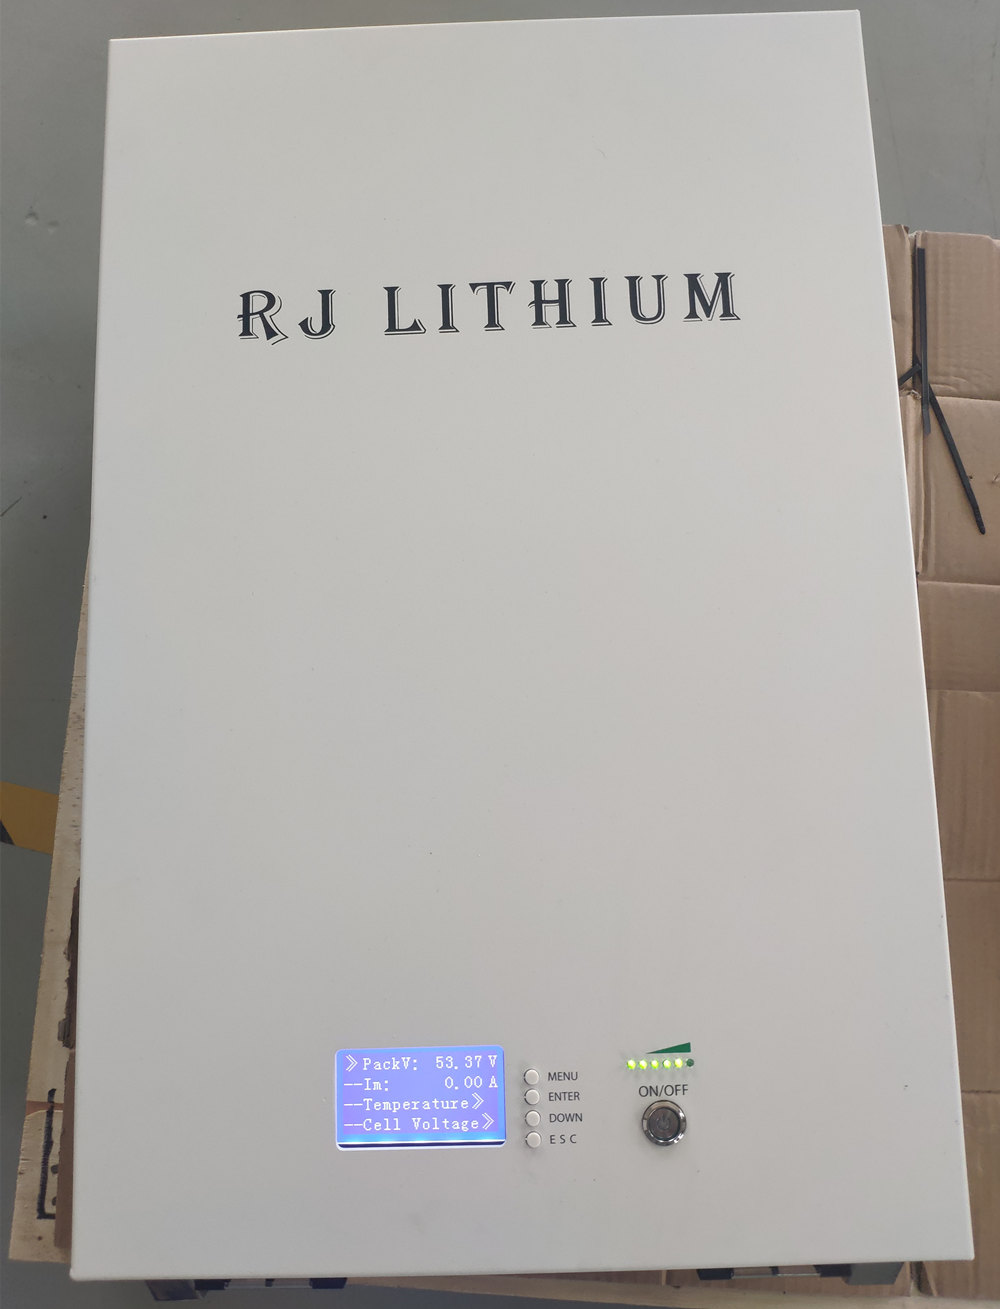 FOSHAN RJ ENERGY 11.7kwh Powerwall home battery Upgrade 48V 228AH LiFePO4 off grid system